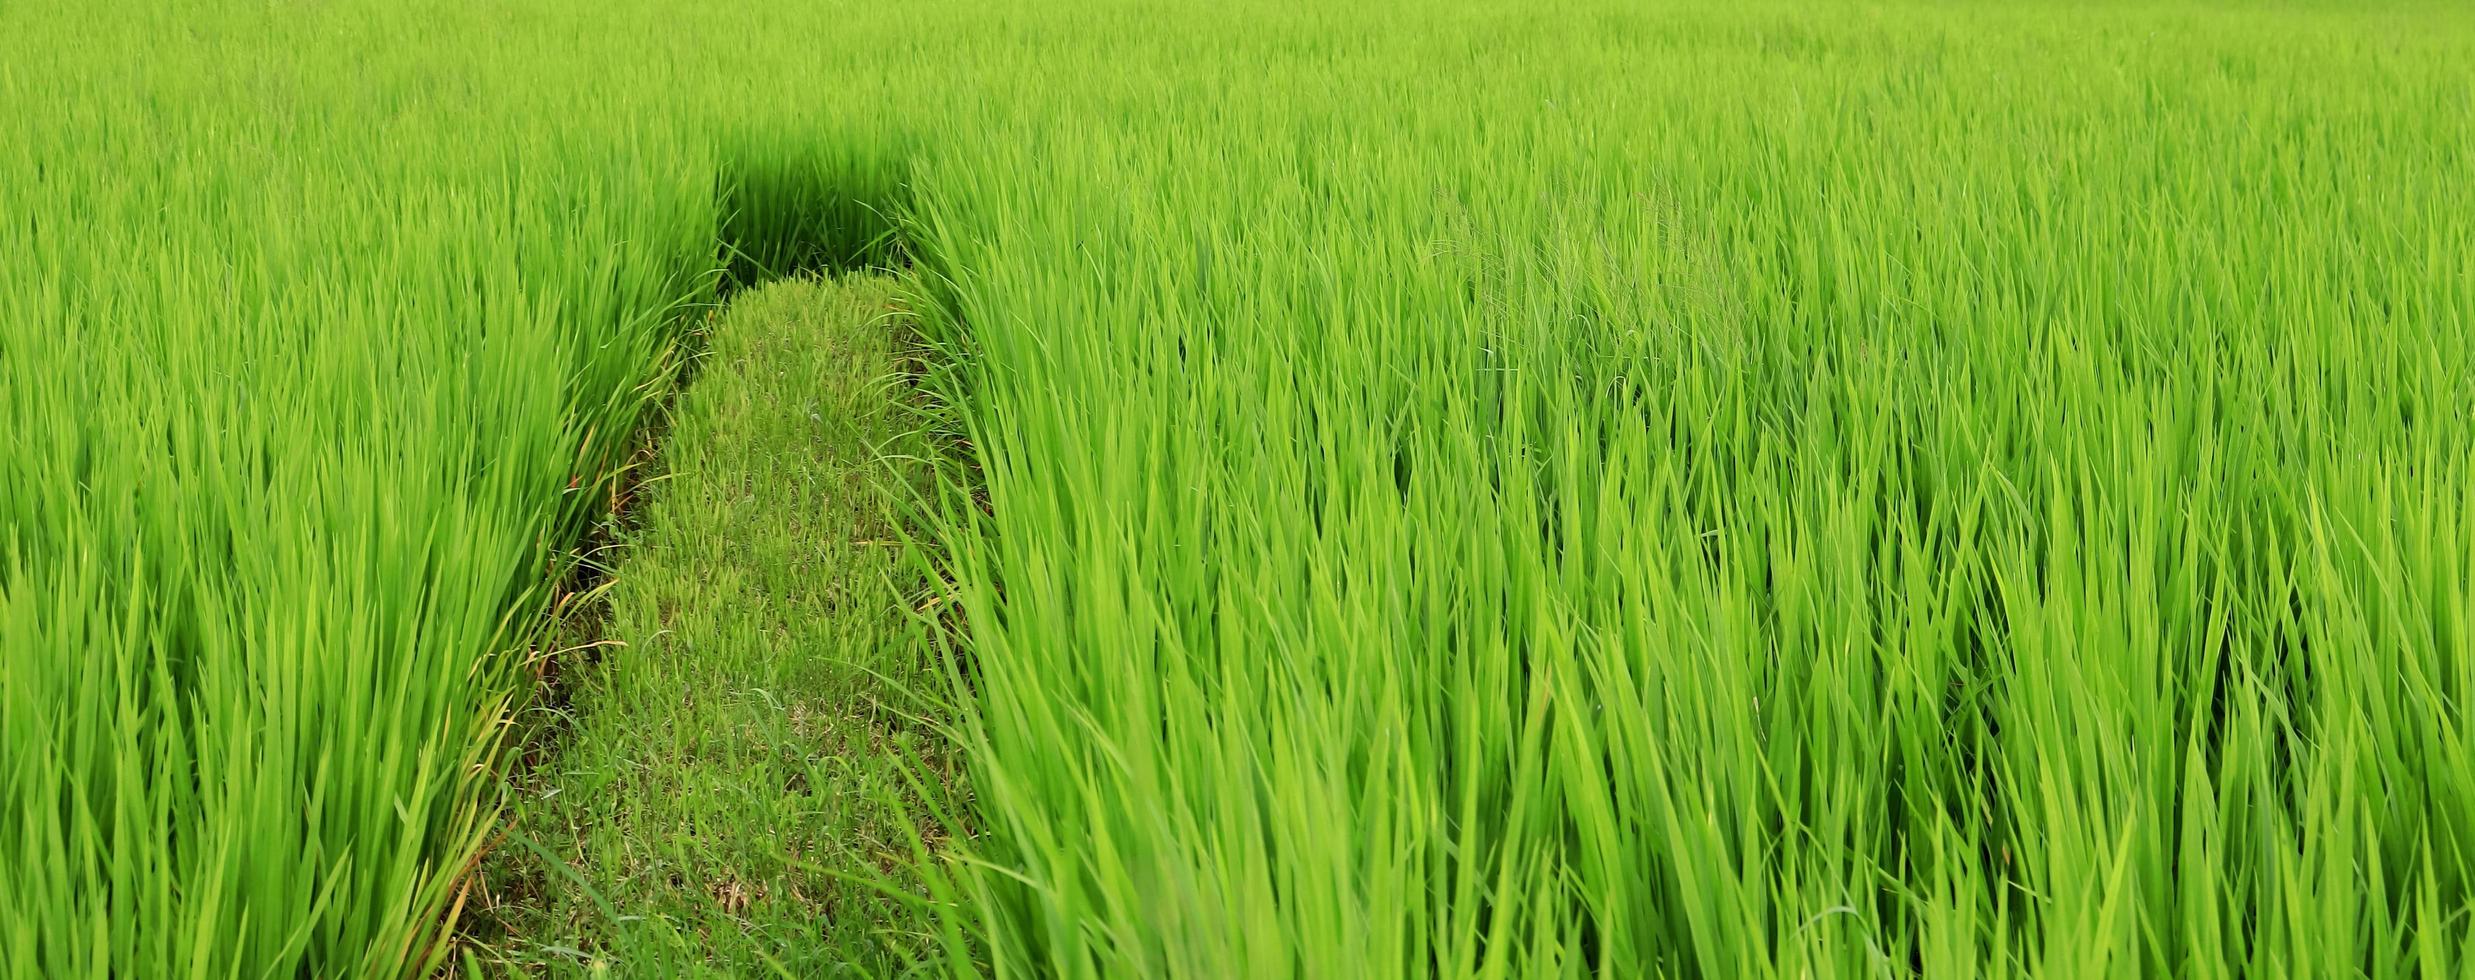 groene rijstvelden foto